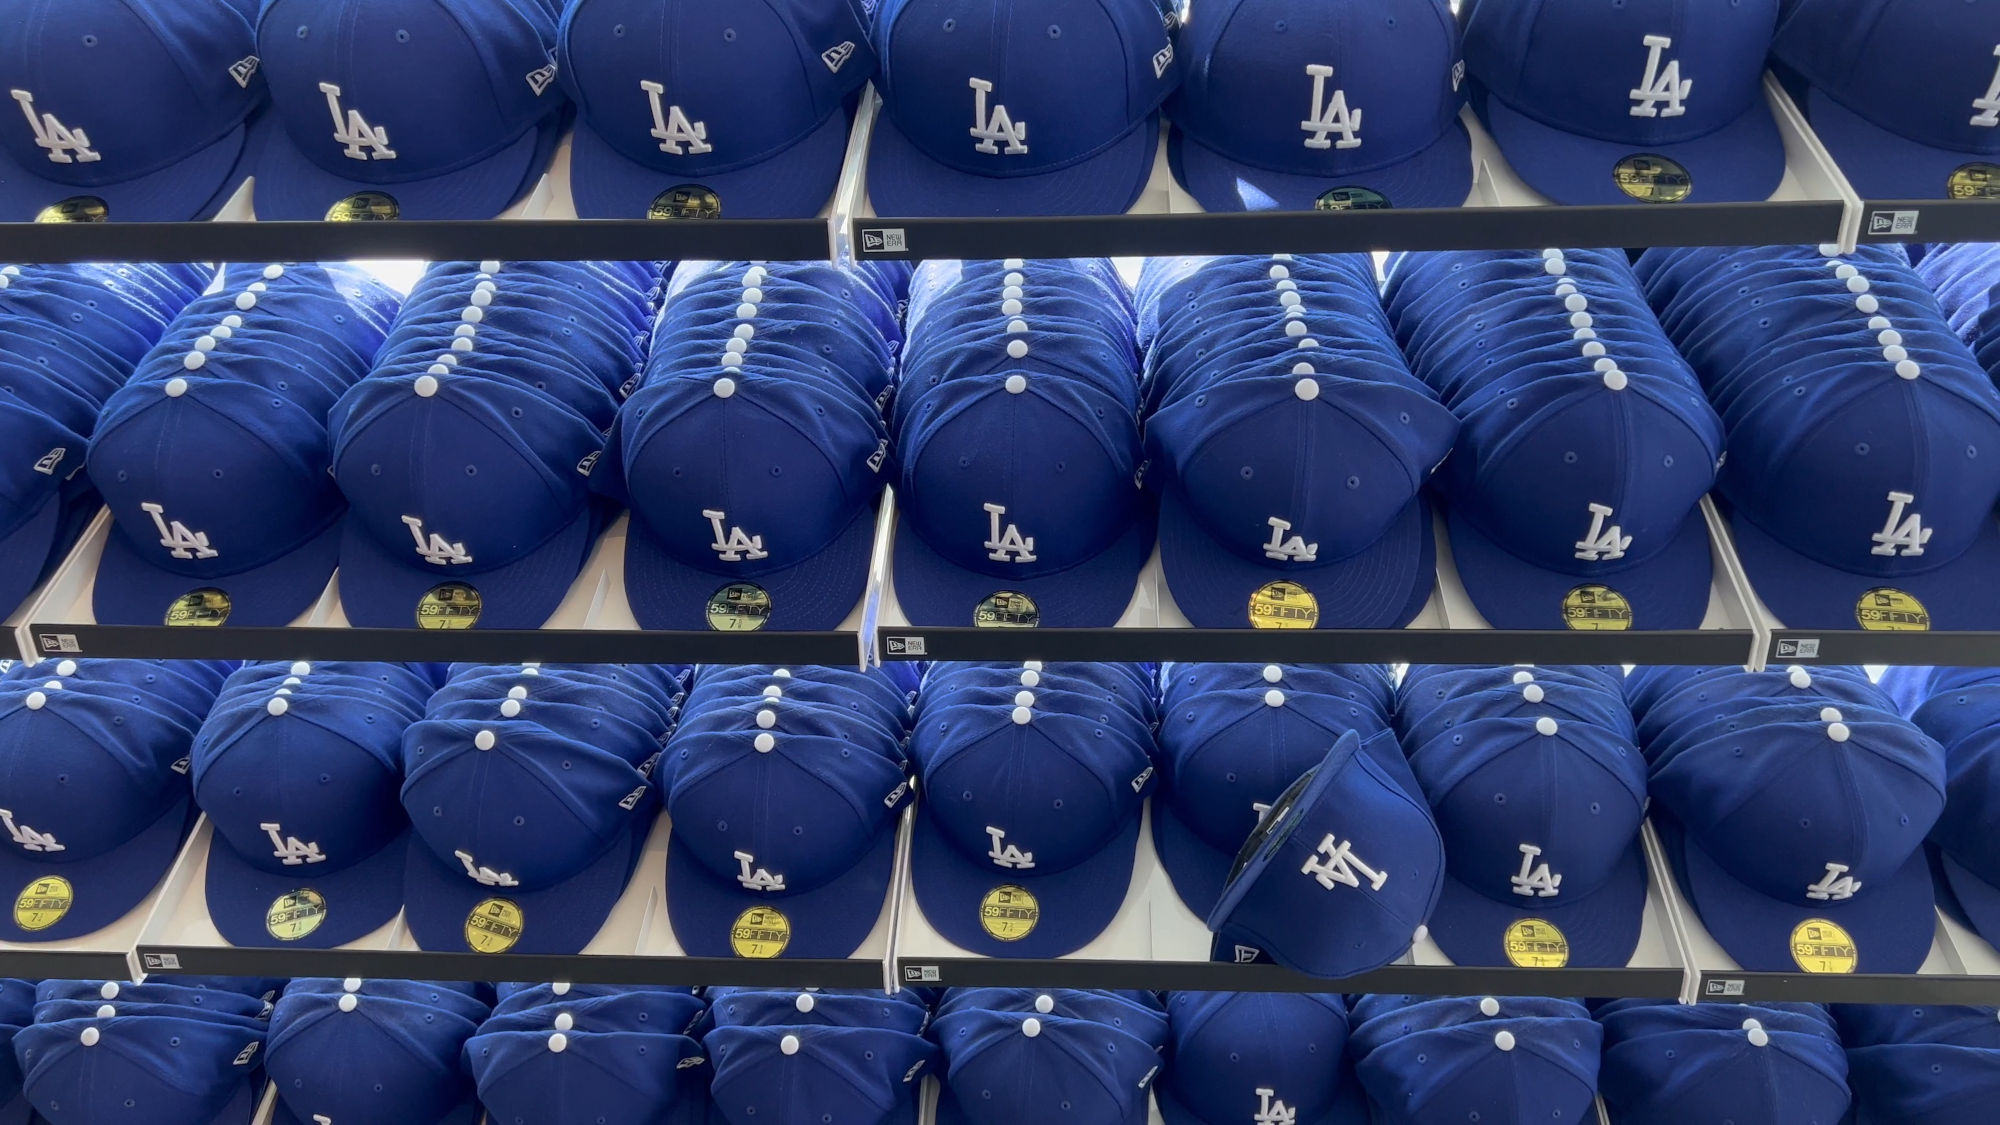 Dodgers Store Hats